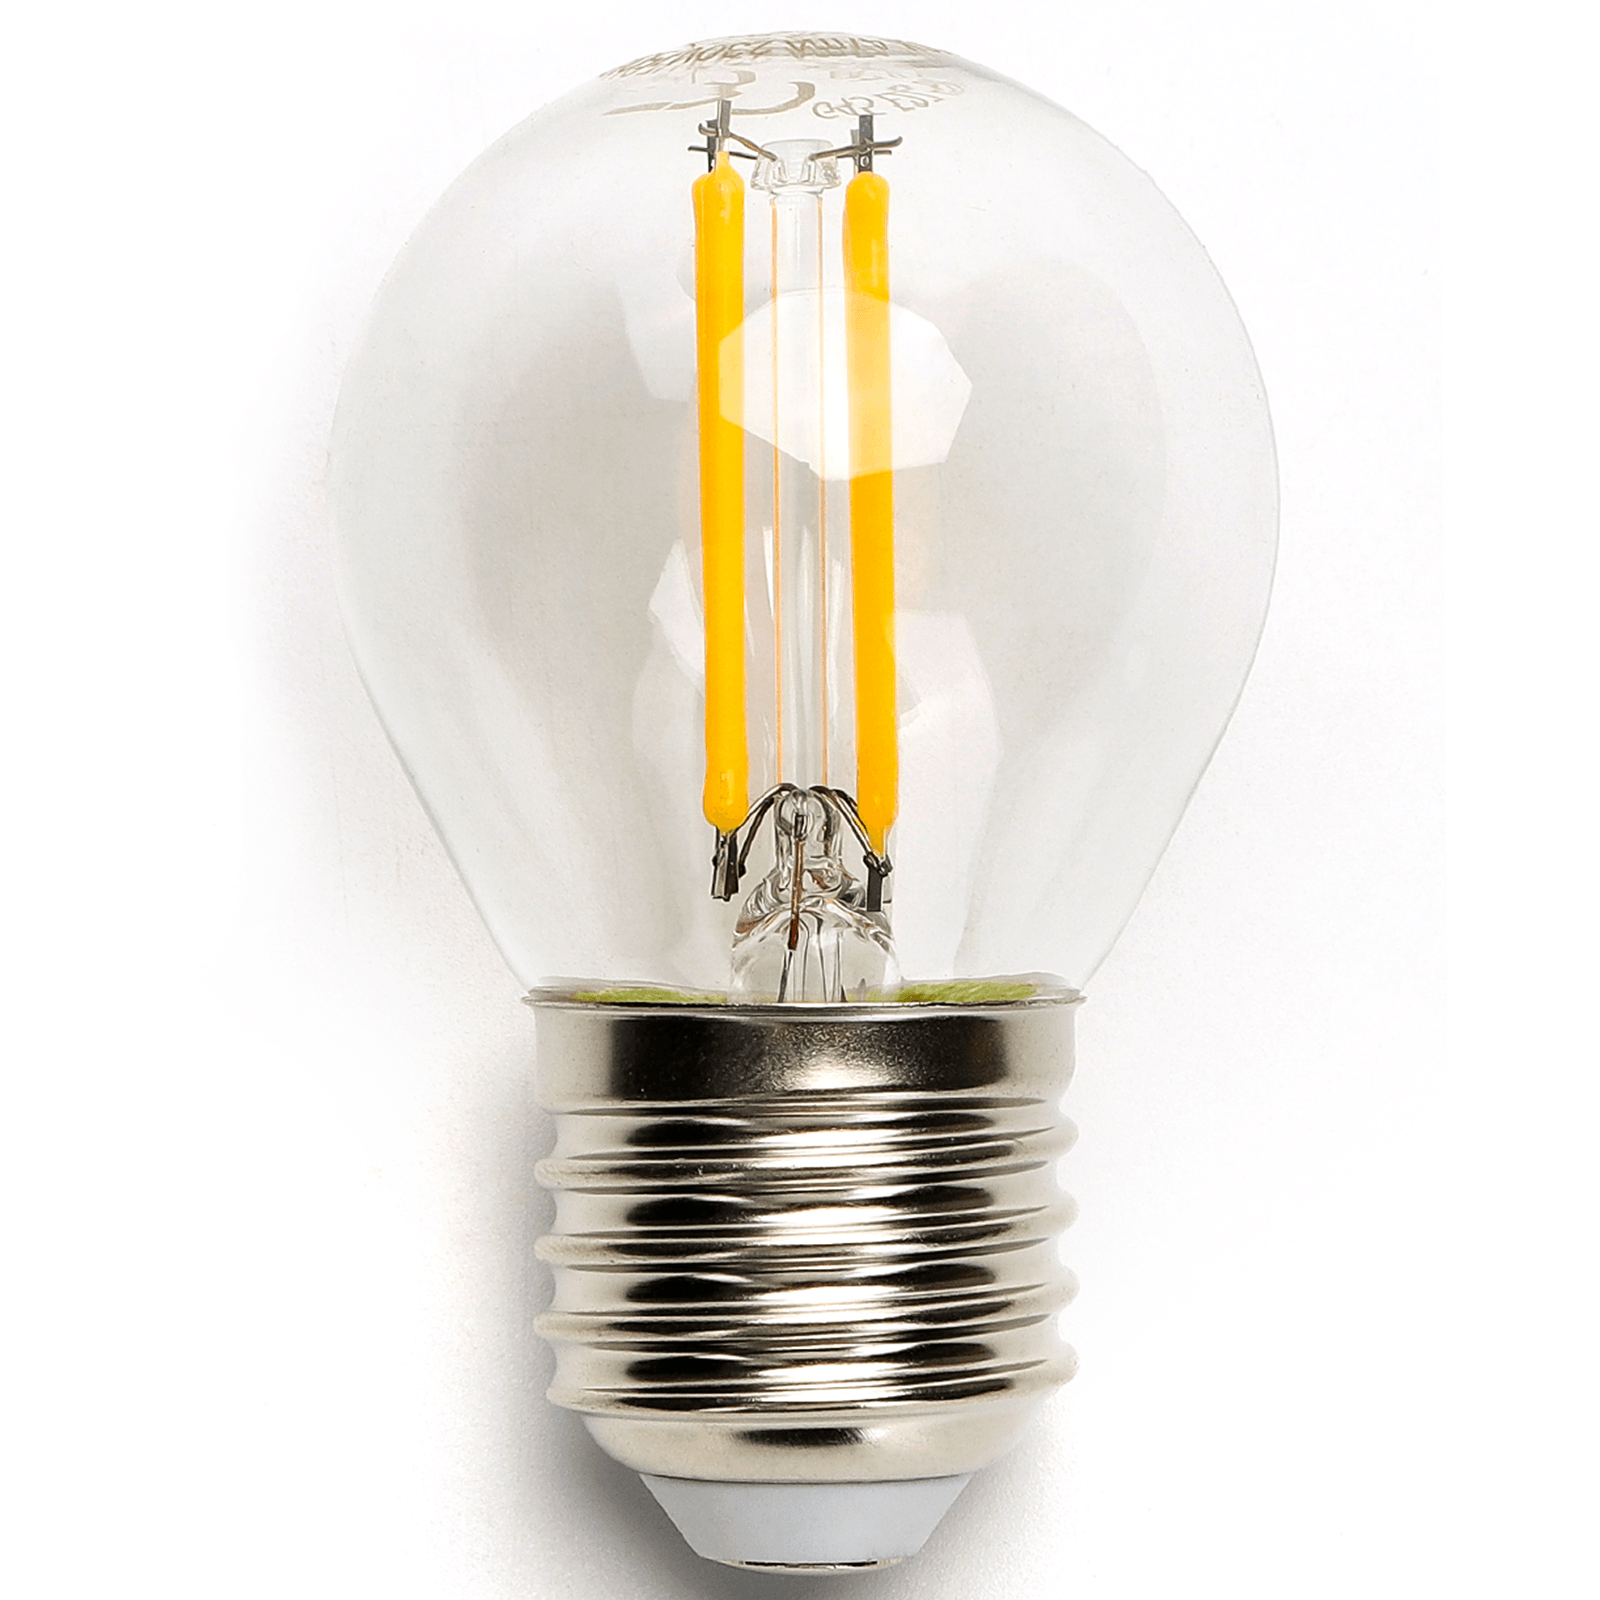 LED Glühbirne - 4W LED Filament Lampe, 2700K warmweiß, E27, Retro